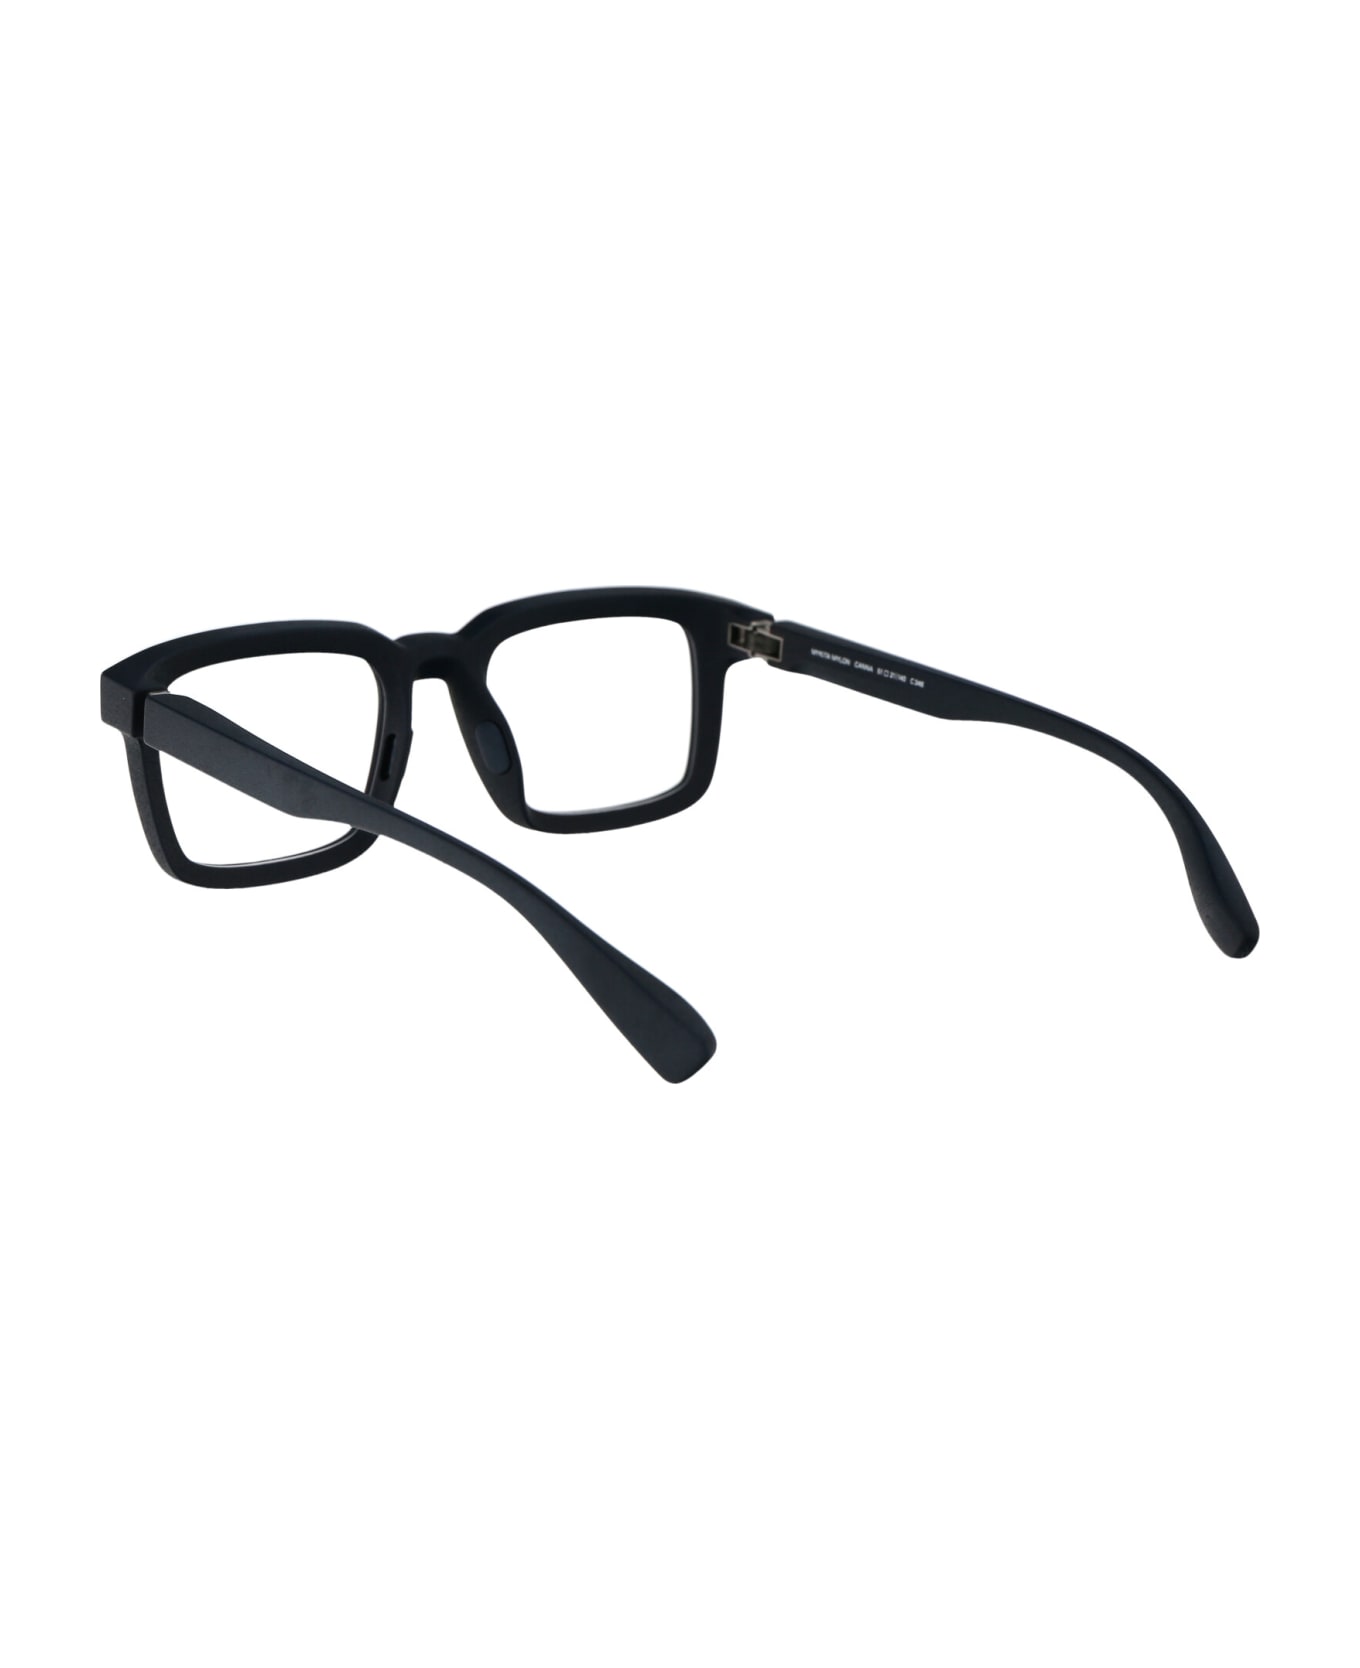 Mykita Canna Glasses - 346 MD34-Indigo Clear